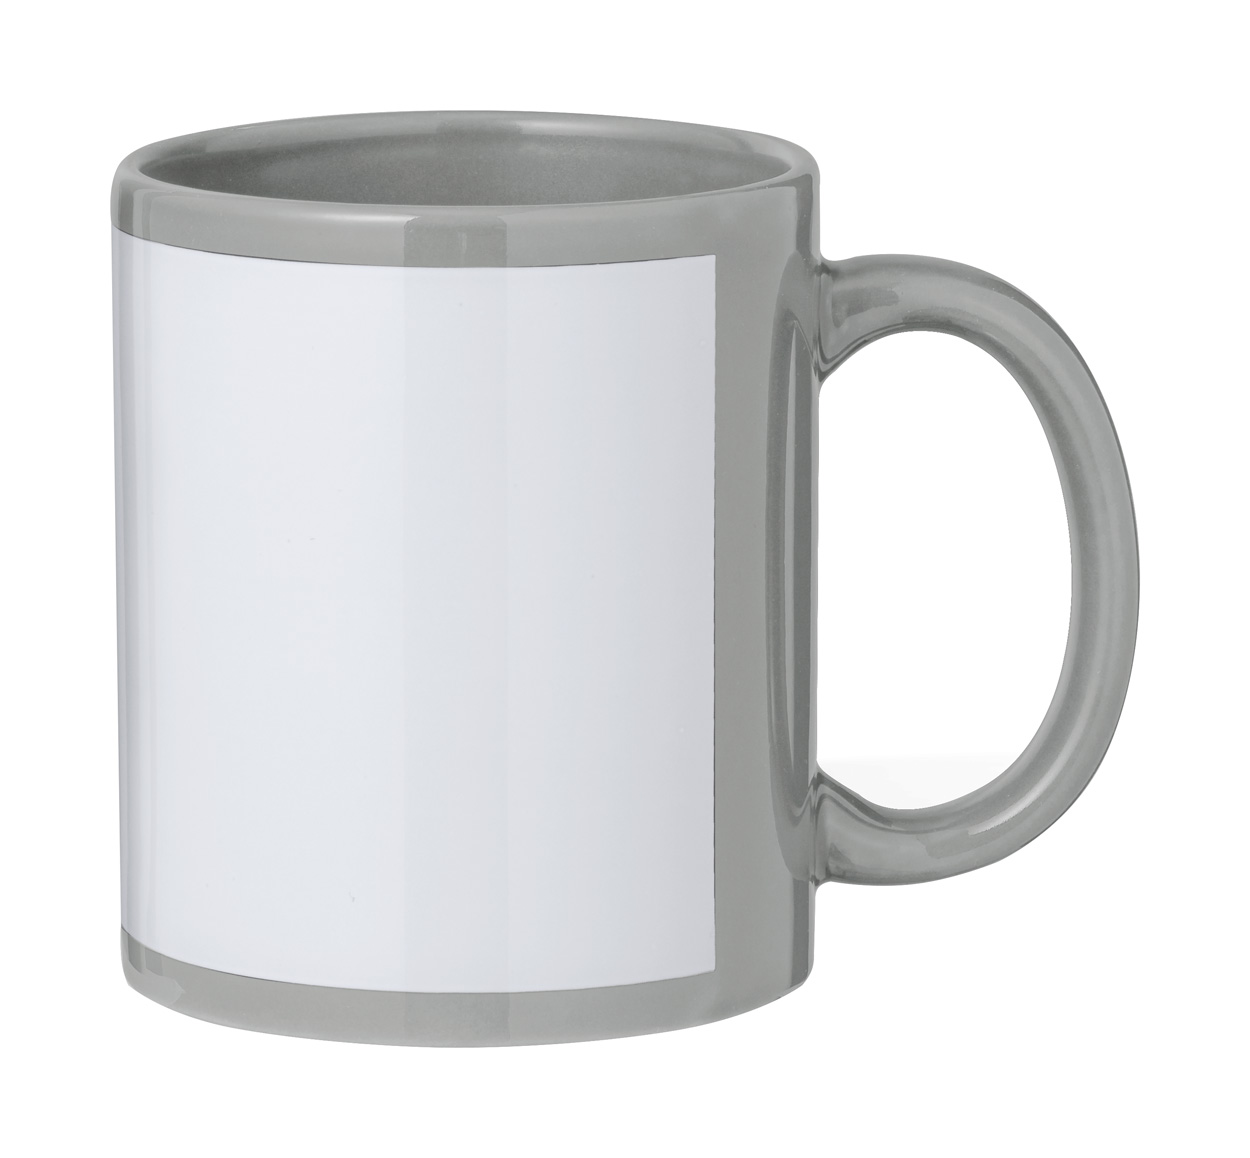 Orchix mug for sublimation - Grau